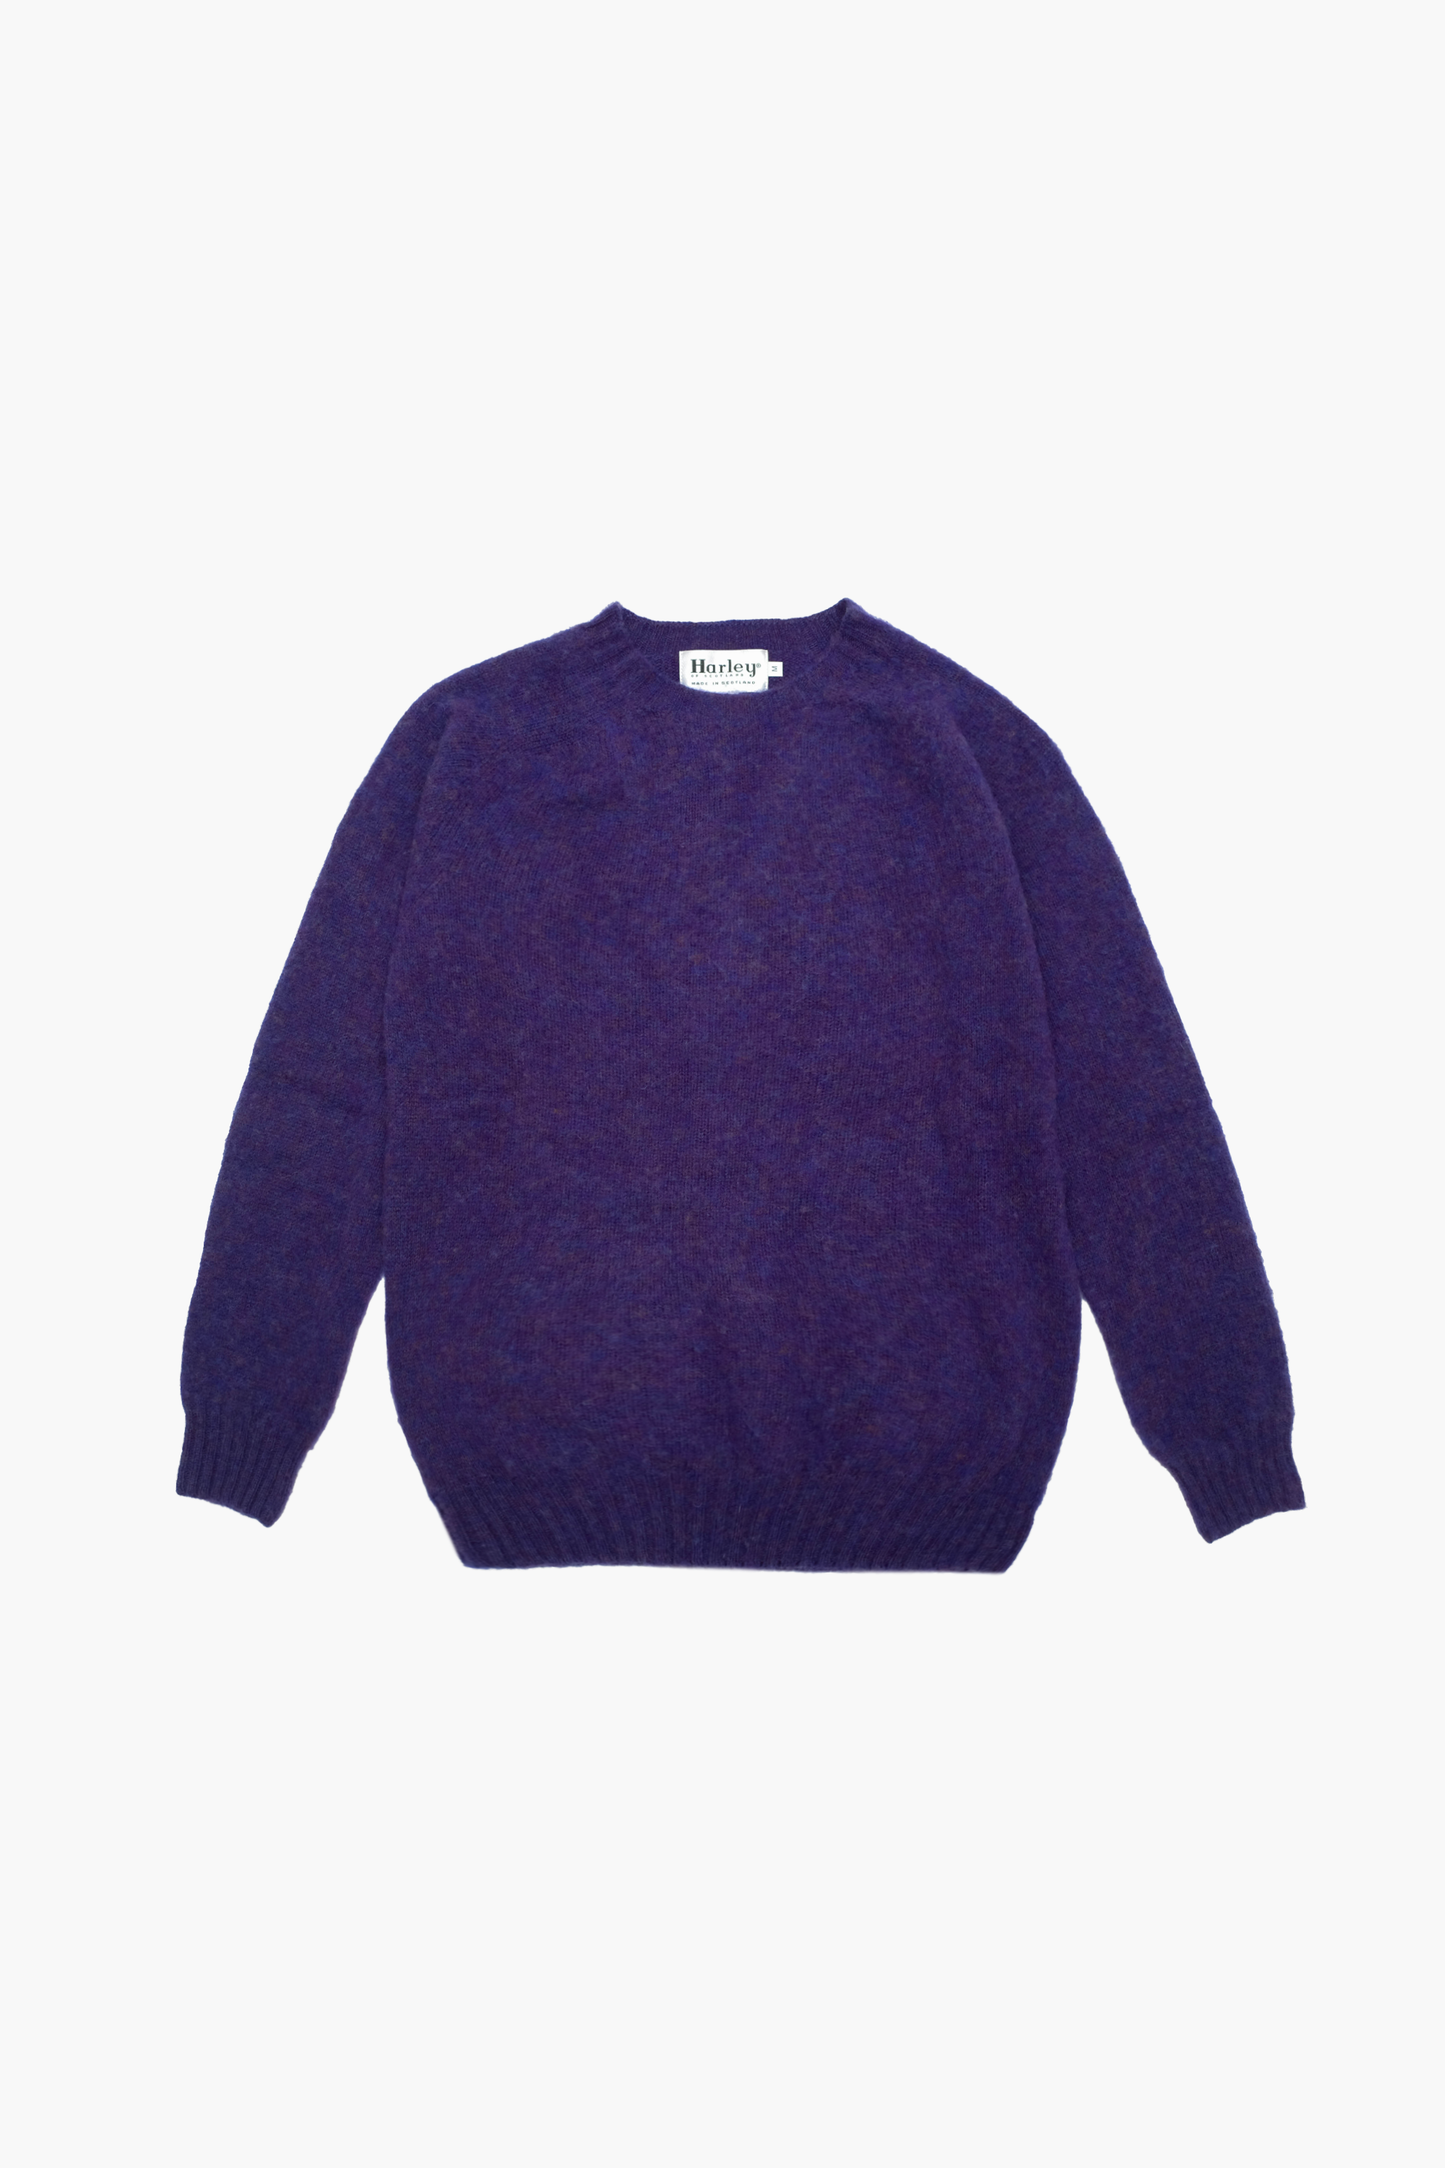 Shaggy Dog sweater in purple wool